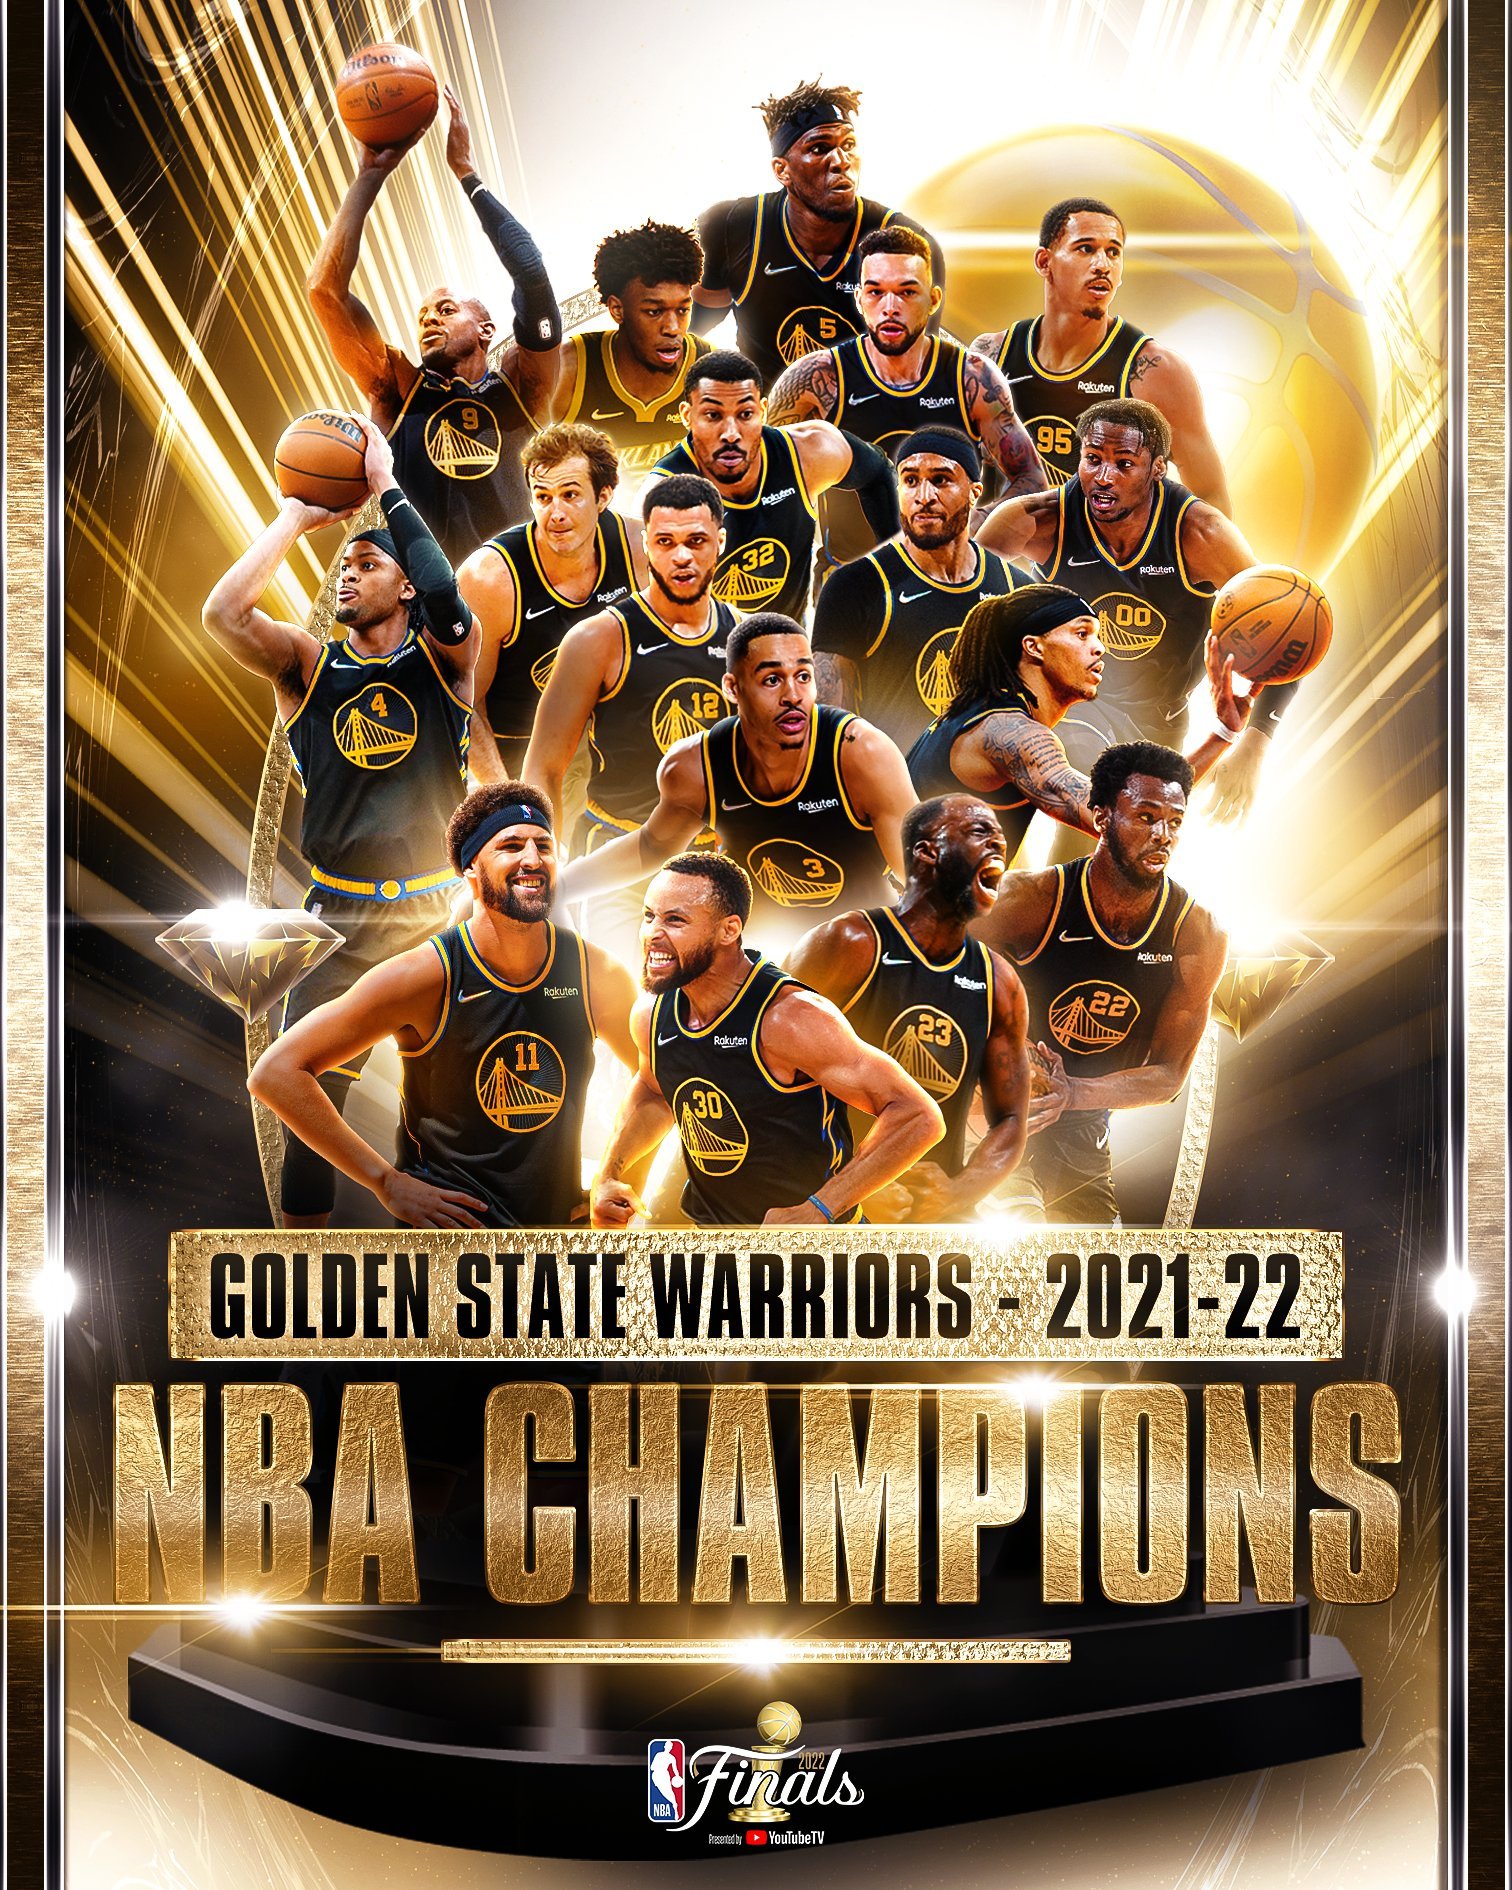 Golden State Warriors NBA Champions 2022 wallpapers